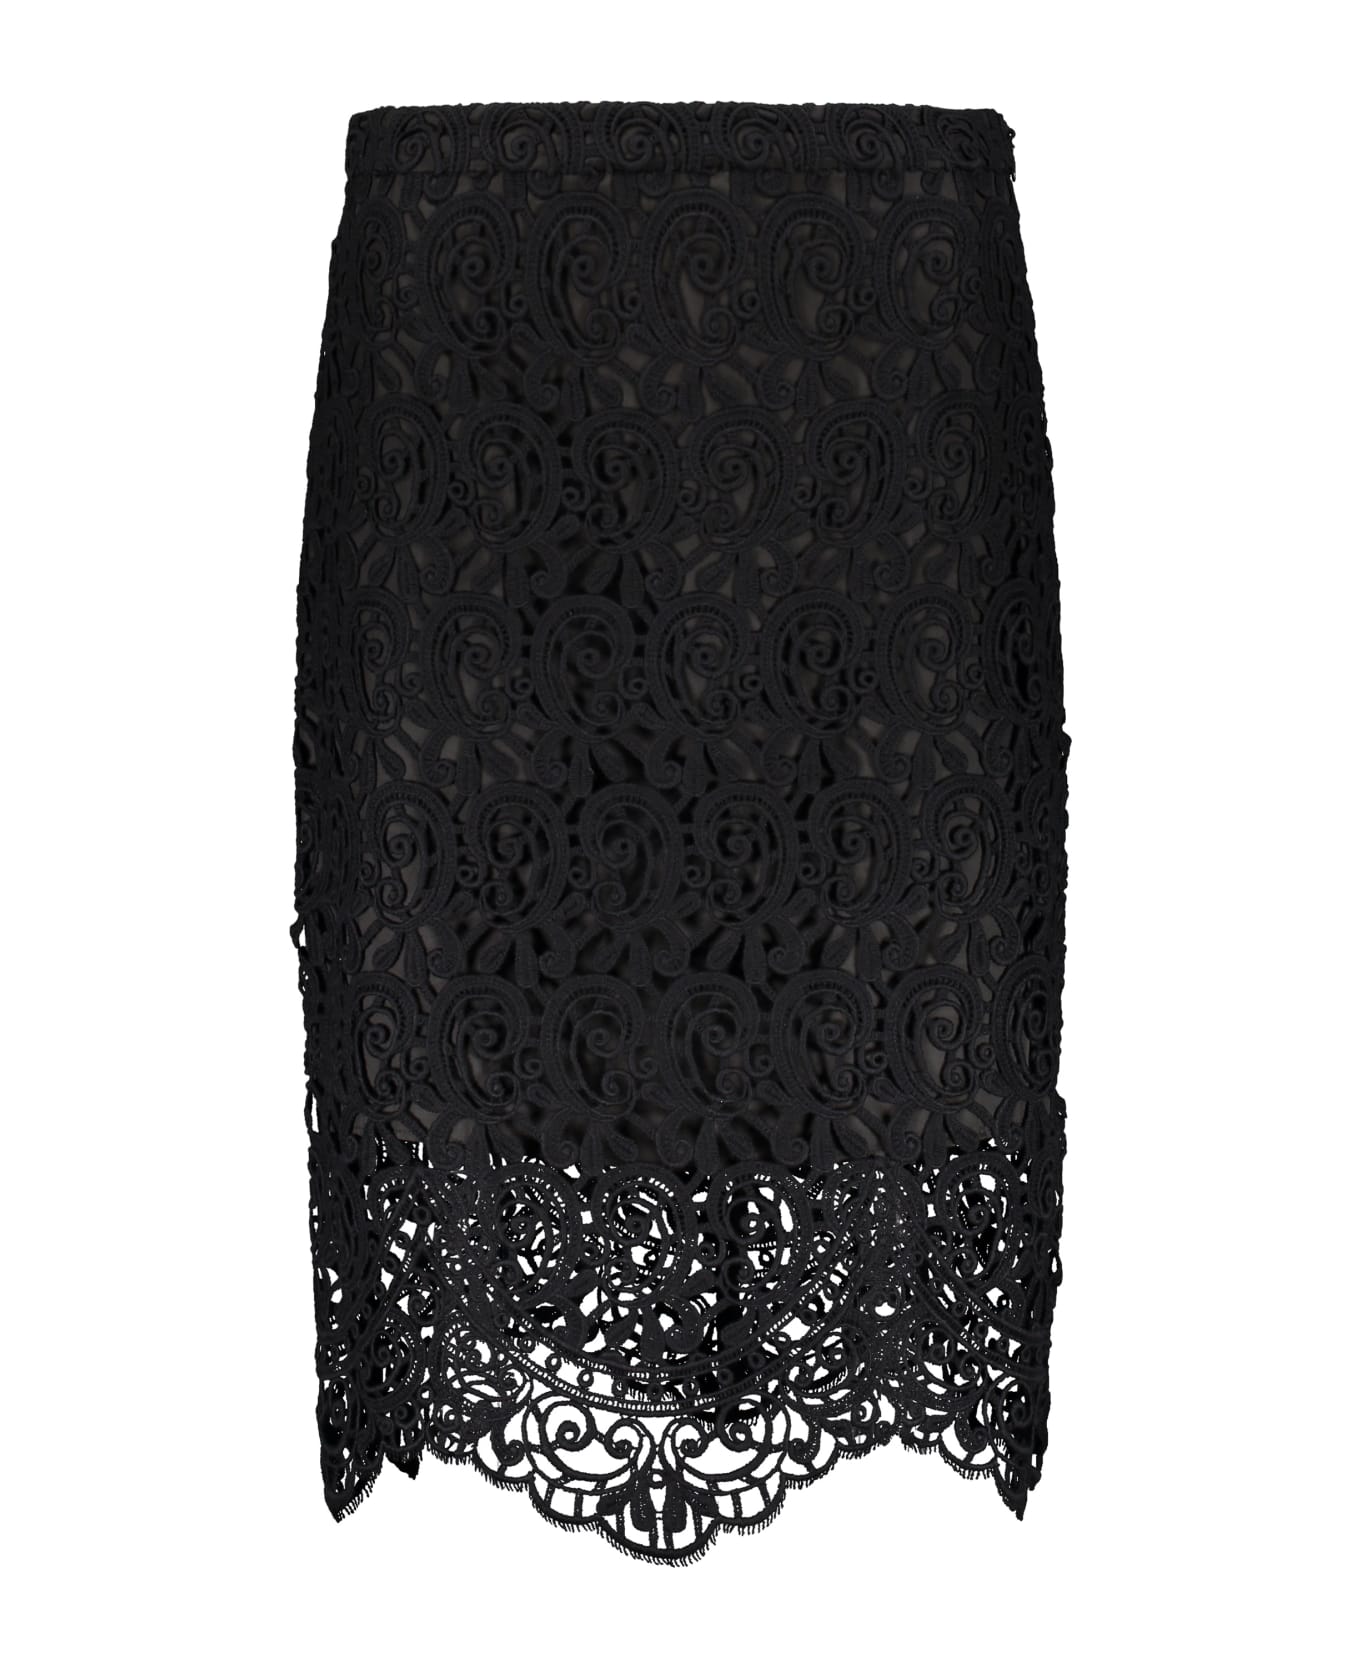 Burberry Lace Skirt - black